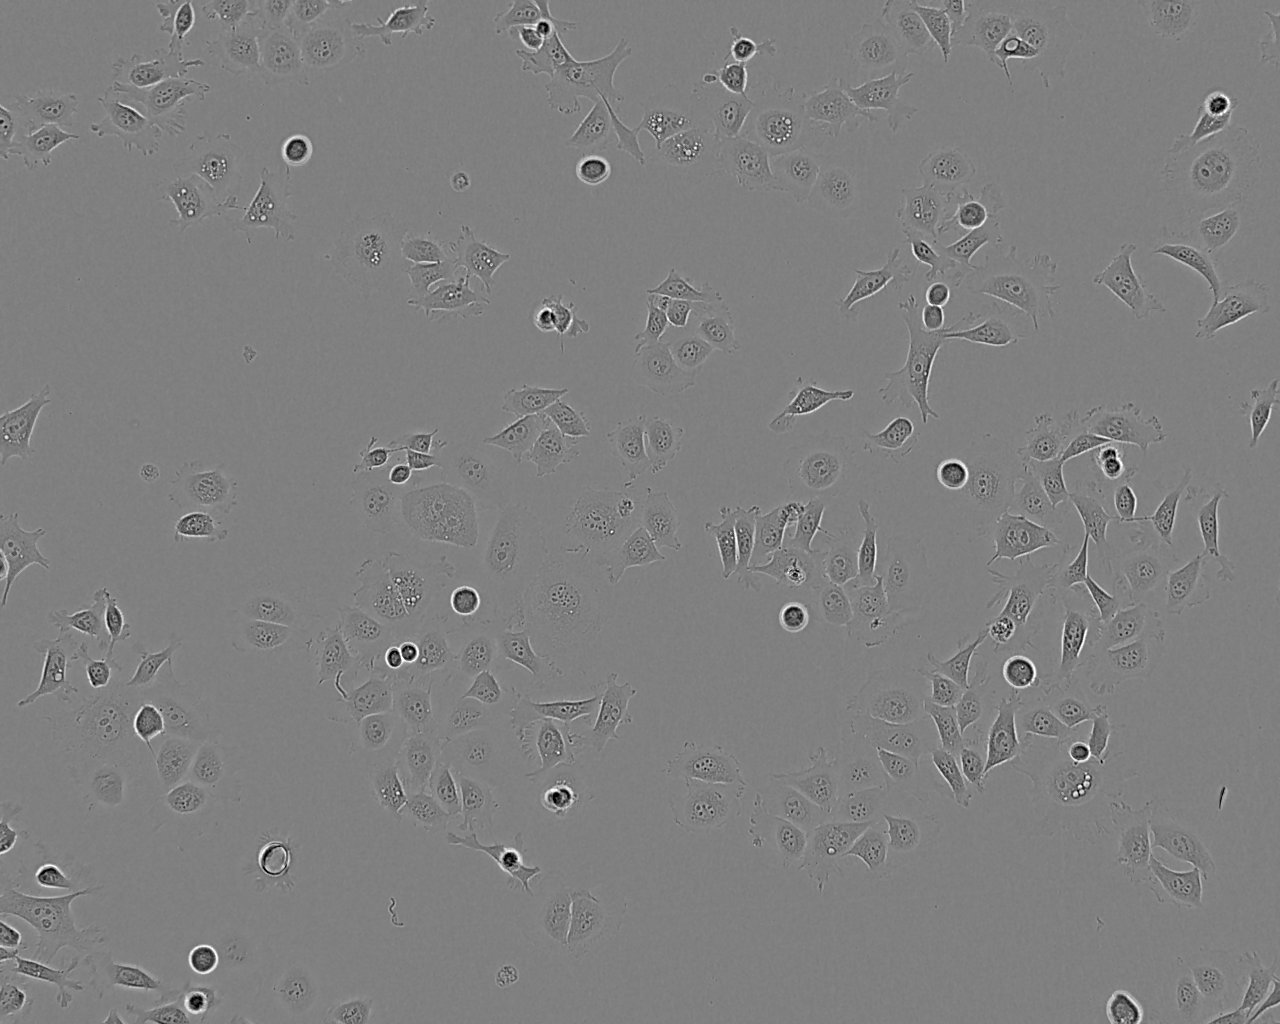 SW982 Epithelial Cell|人滑膜肉瘤传代细胞(有STR鉴定),SW982 Epithelial Cell